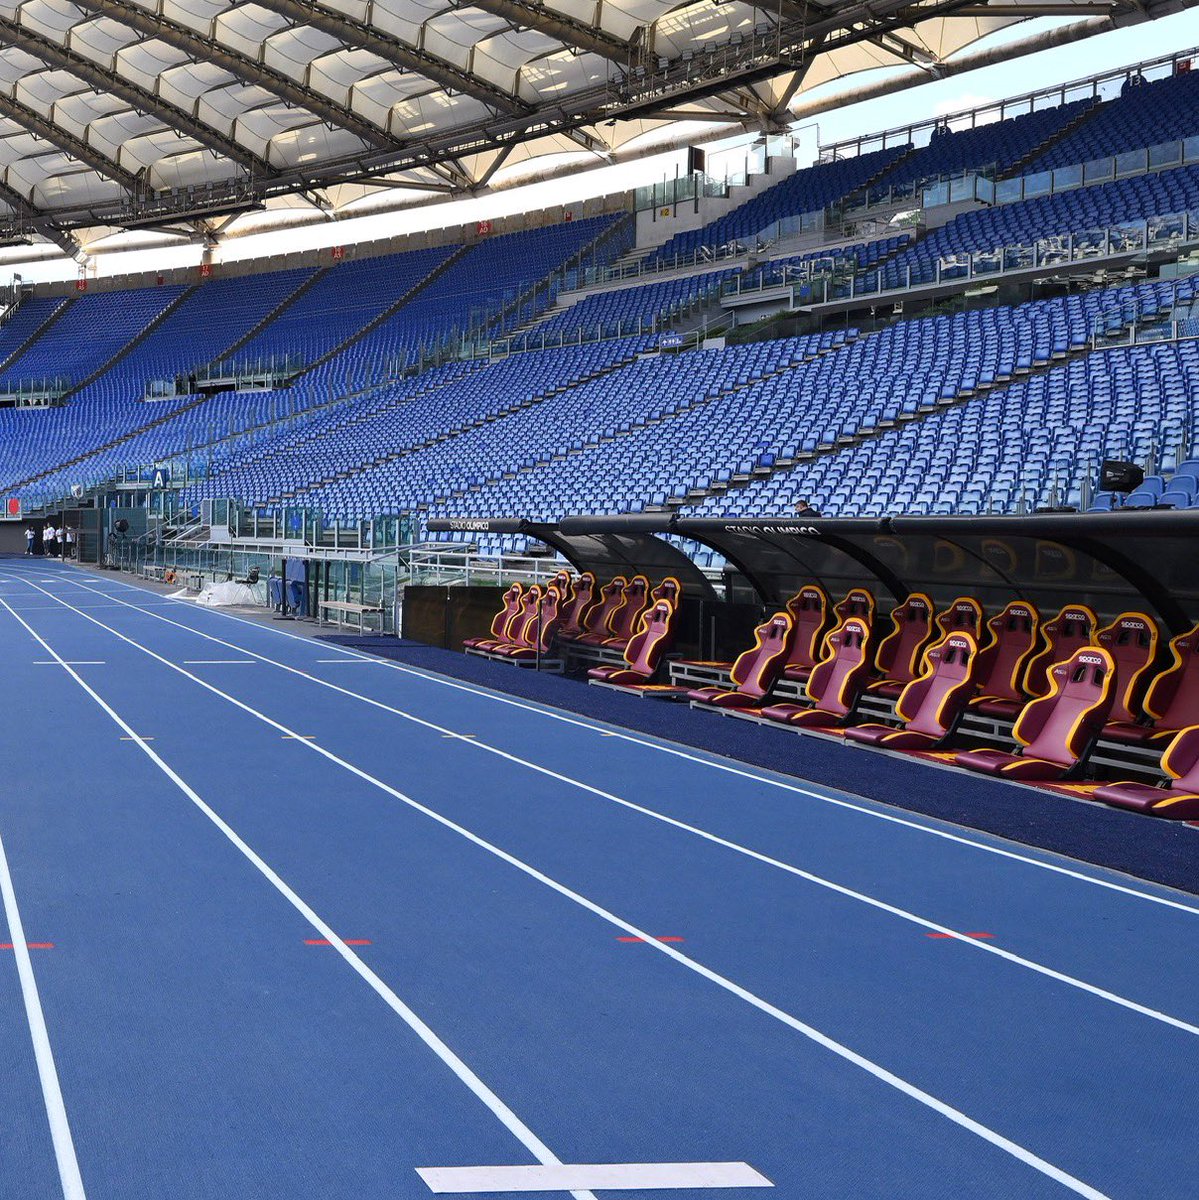 𝐀𝐳𝐳𝐮𝐫𝐫𝐚! Correremo qui 💙💪🏻 #atleticaitaliana #Roma2024 | @EuroAthletics | @earoma2024